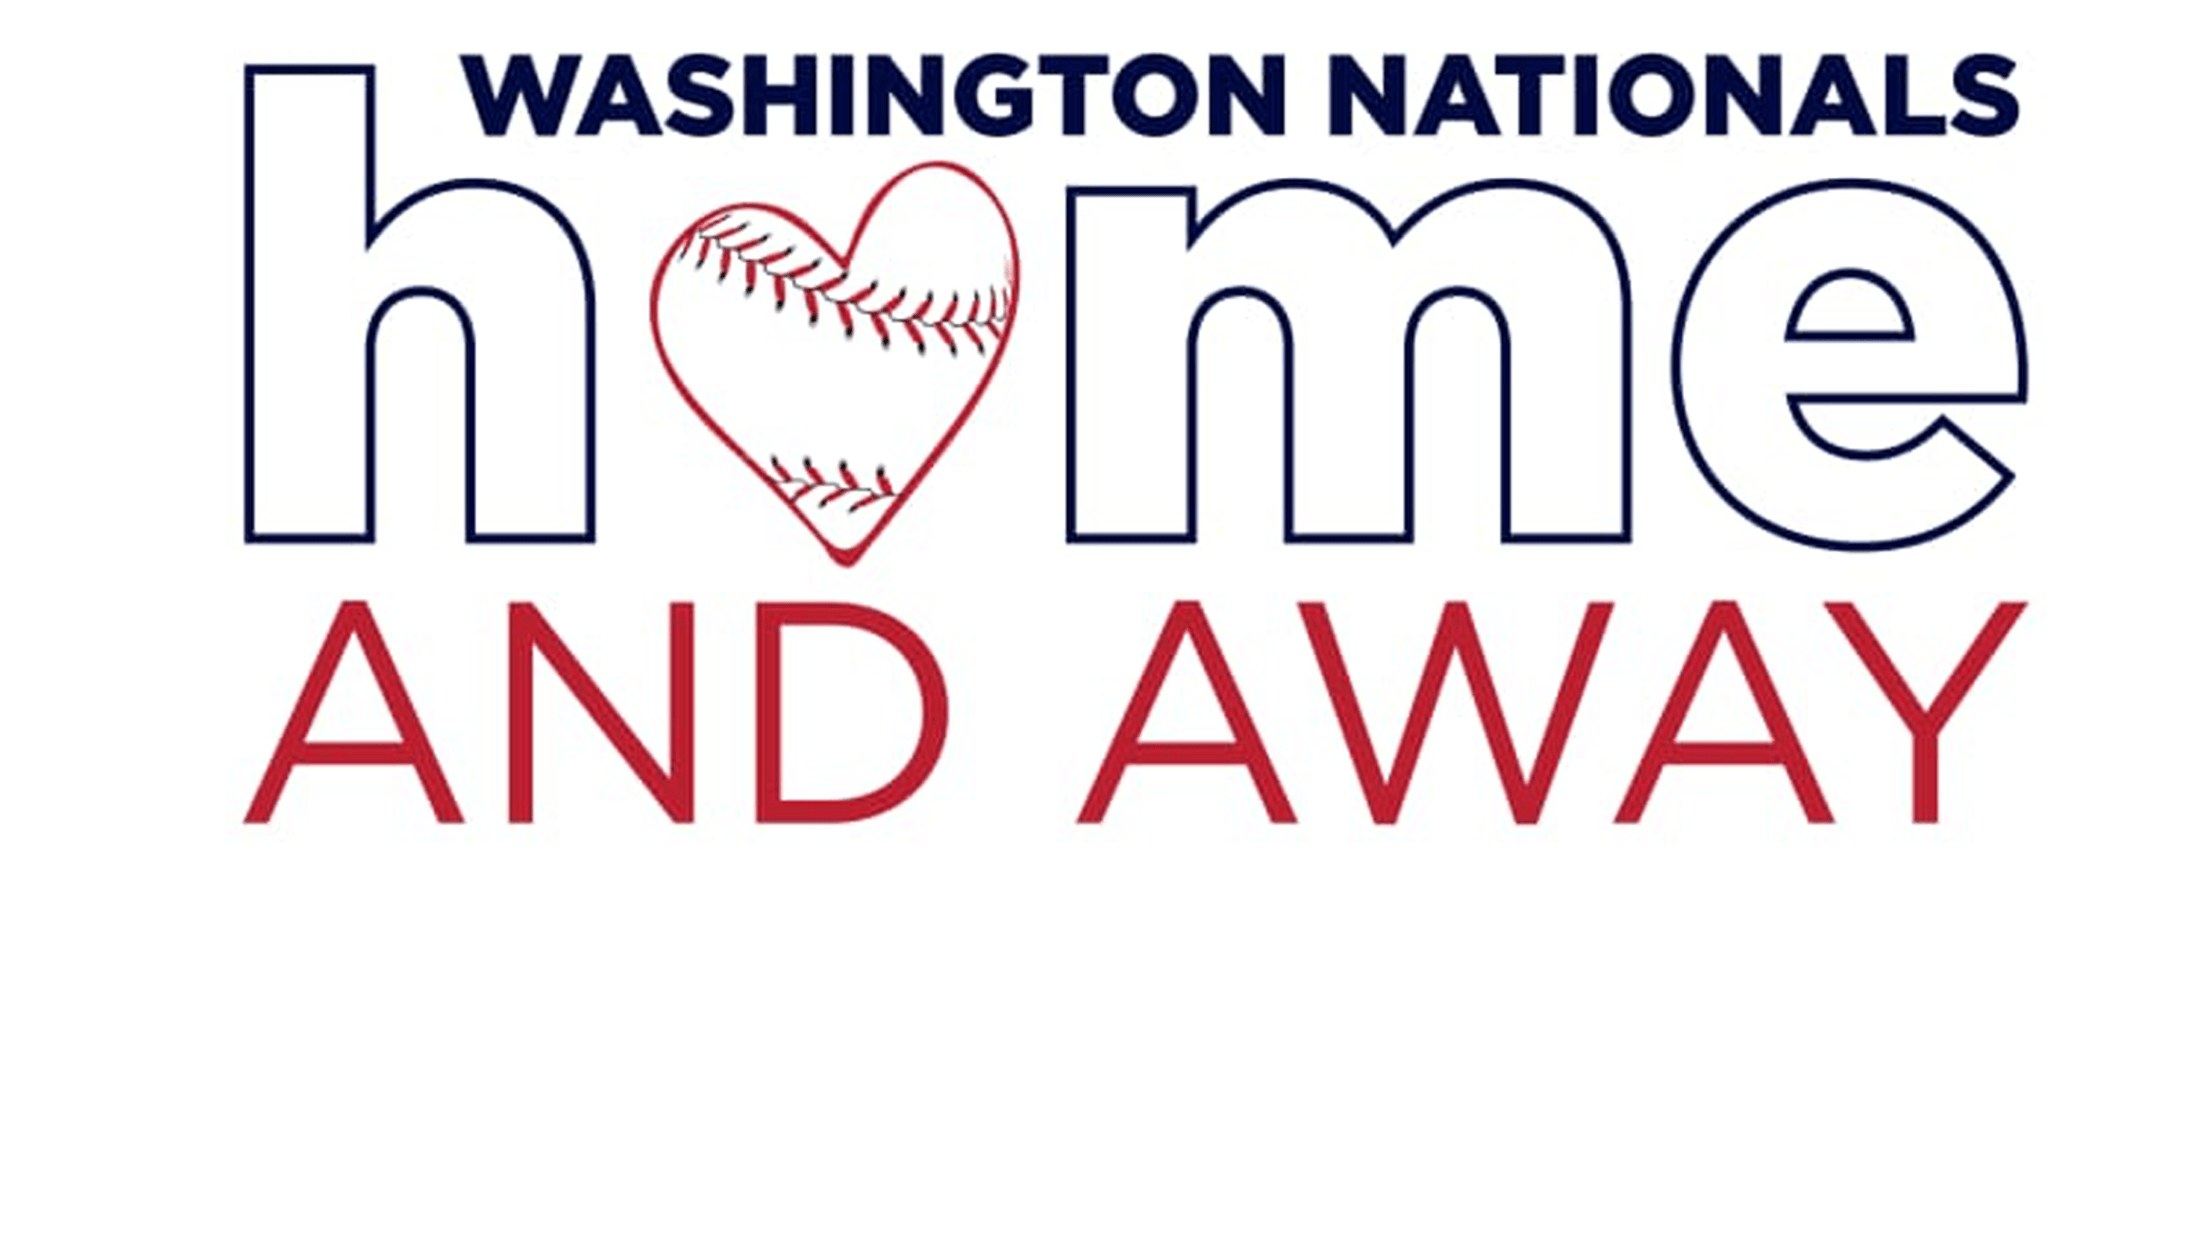 Federal Baseball, a Washington Nationals community